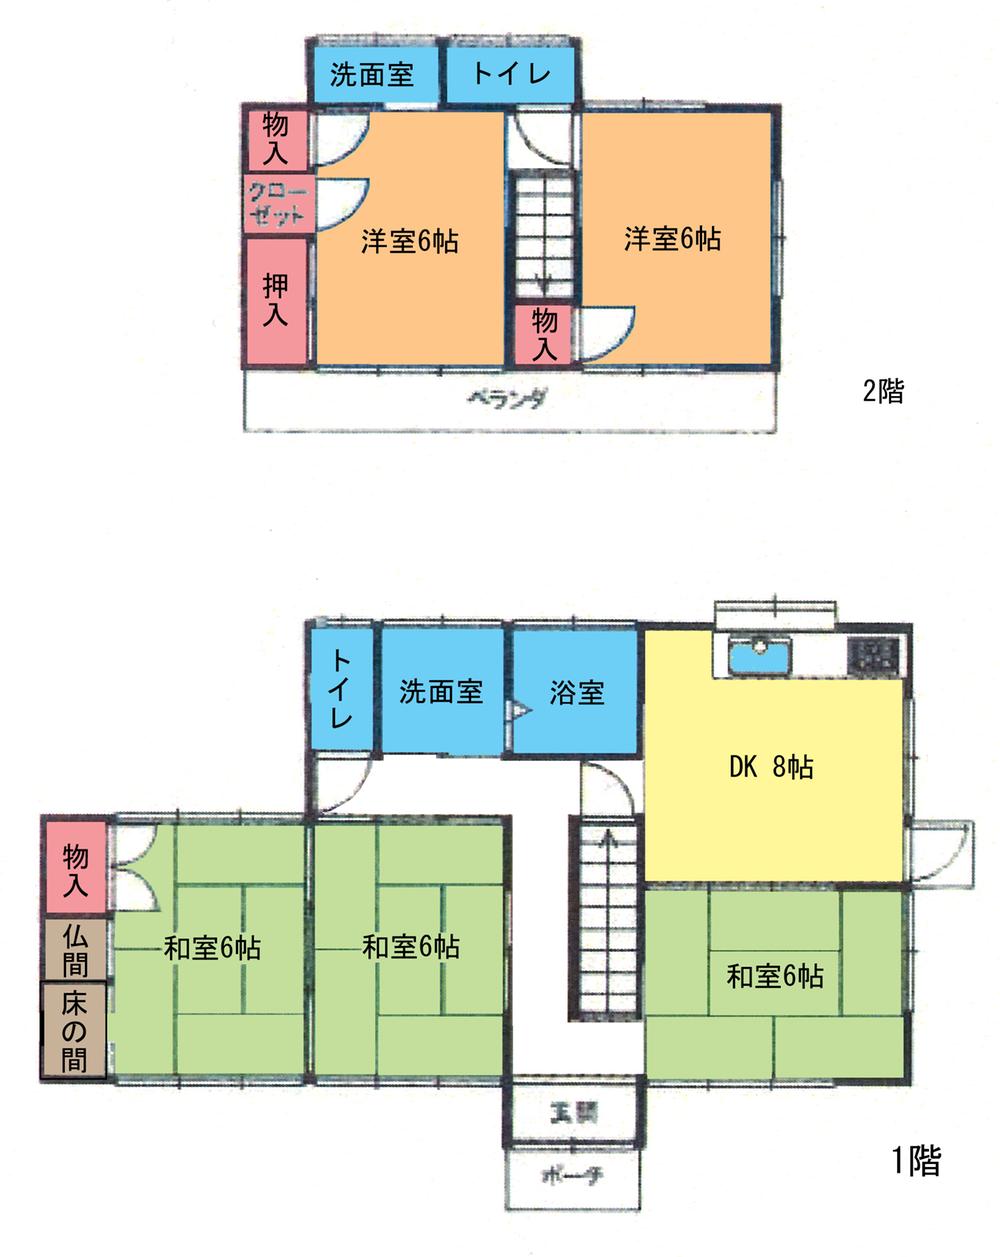 Floor plan. 15.8 million yen, 5DK, Land area 491.21 sq m , Building area 96.88 sq m floor plan